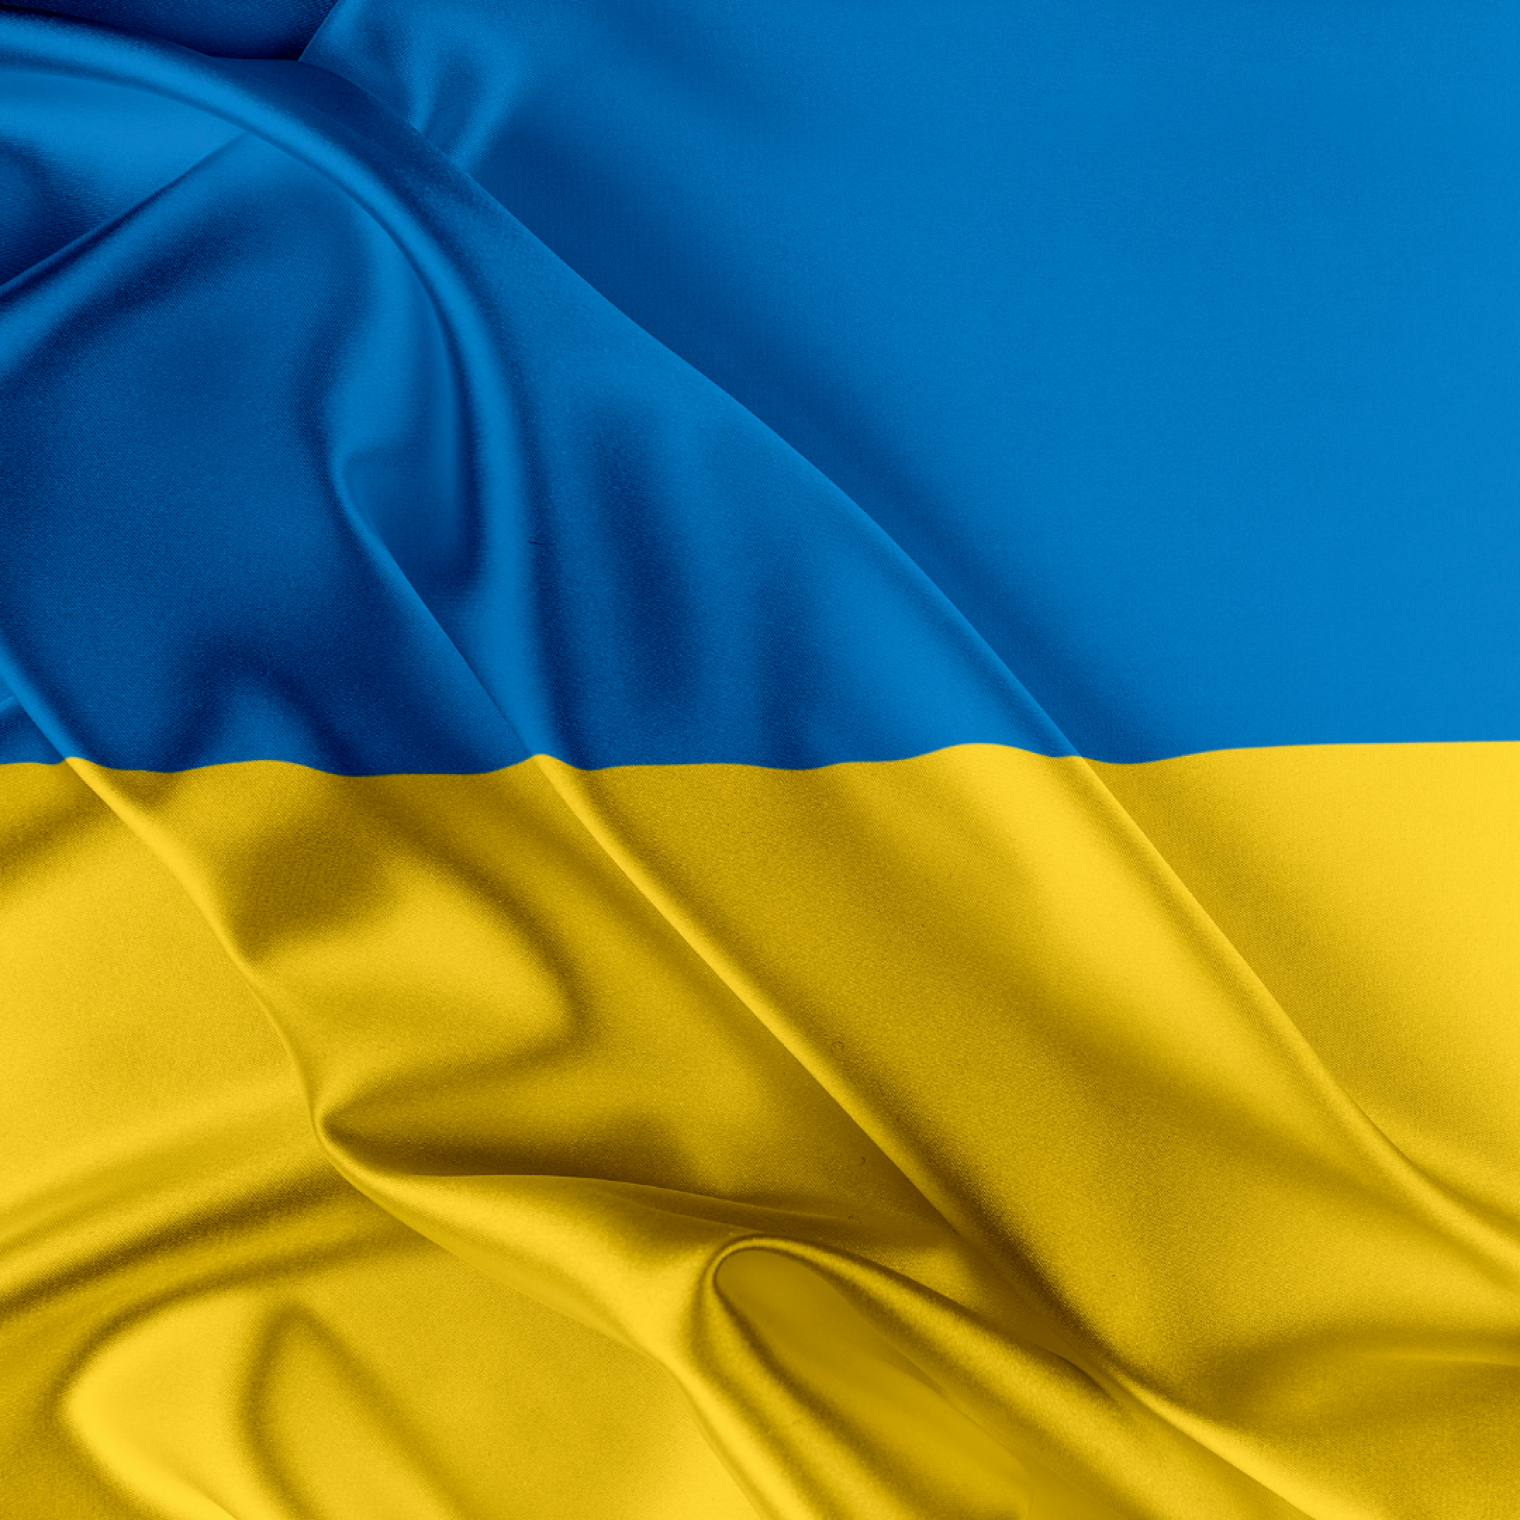 IAPA´s Statement on the Developments in Ukraine